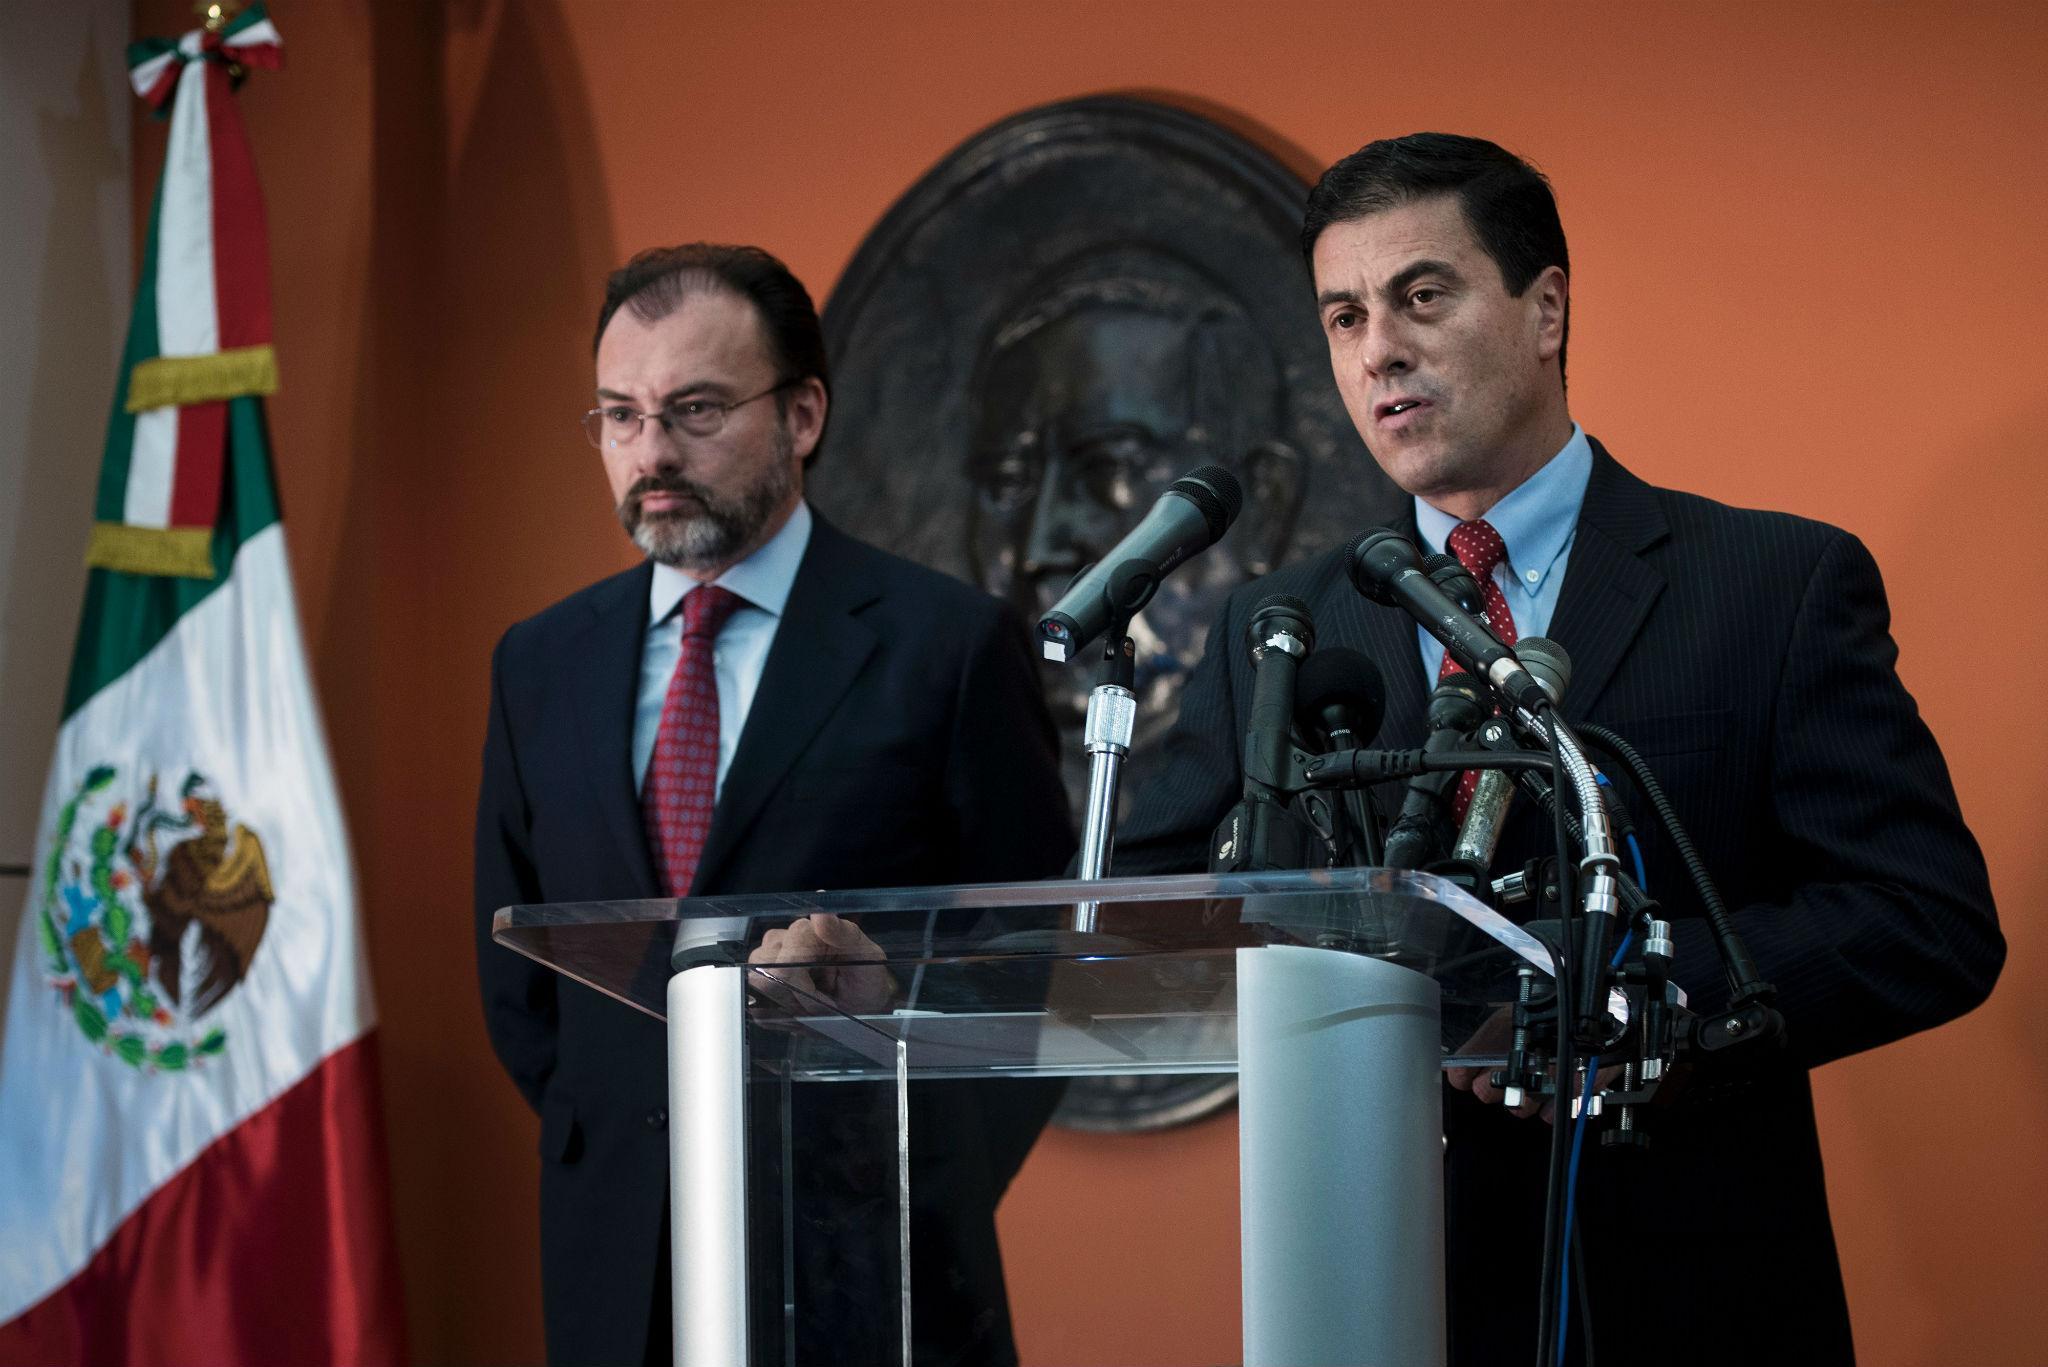 Mexico's Ambassador to the US, Geronimo Gutierrez (right), introduces Mexico's Foreign Minister, Luis Videgaray